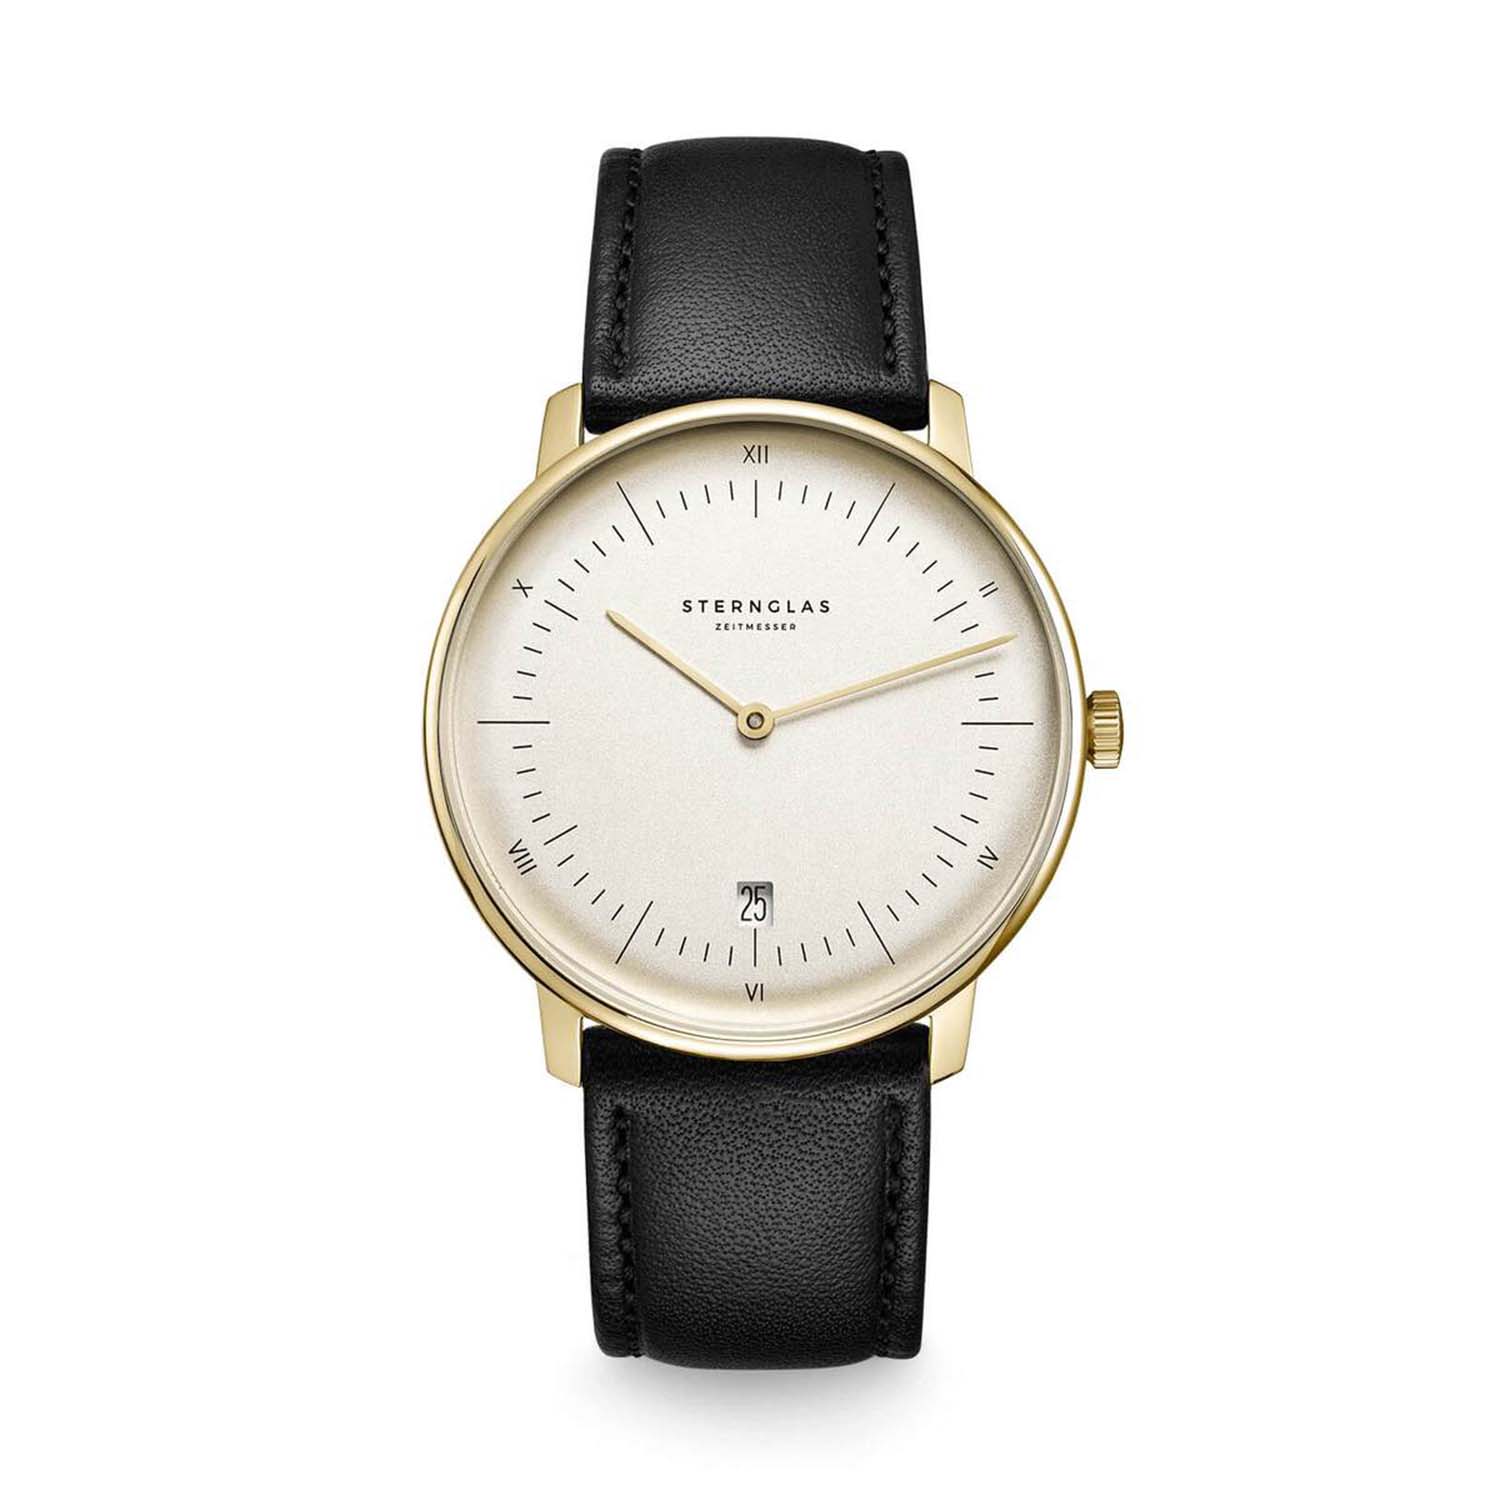 Sternglas watch NAOS Gold. Bauhaus Movement